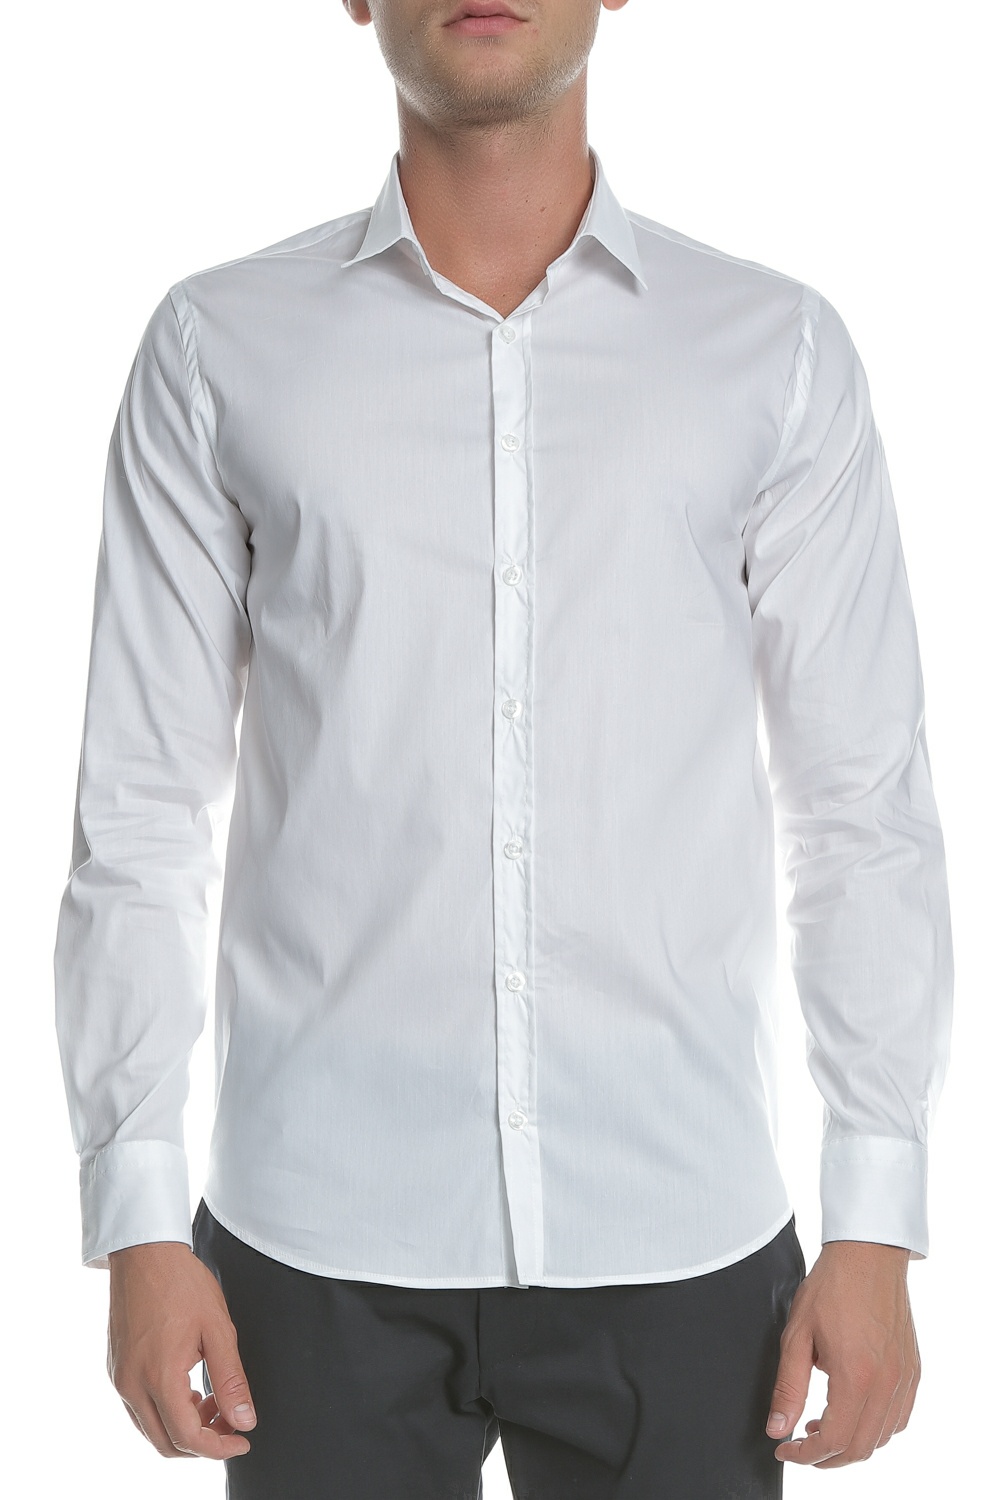 SSEINSE - Ανδρικό πουκάμισο SSEINSE λευκό Ανδρικά/Ρούχα/Πουκάμισα/Μακρυμάνικα